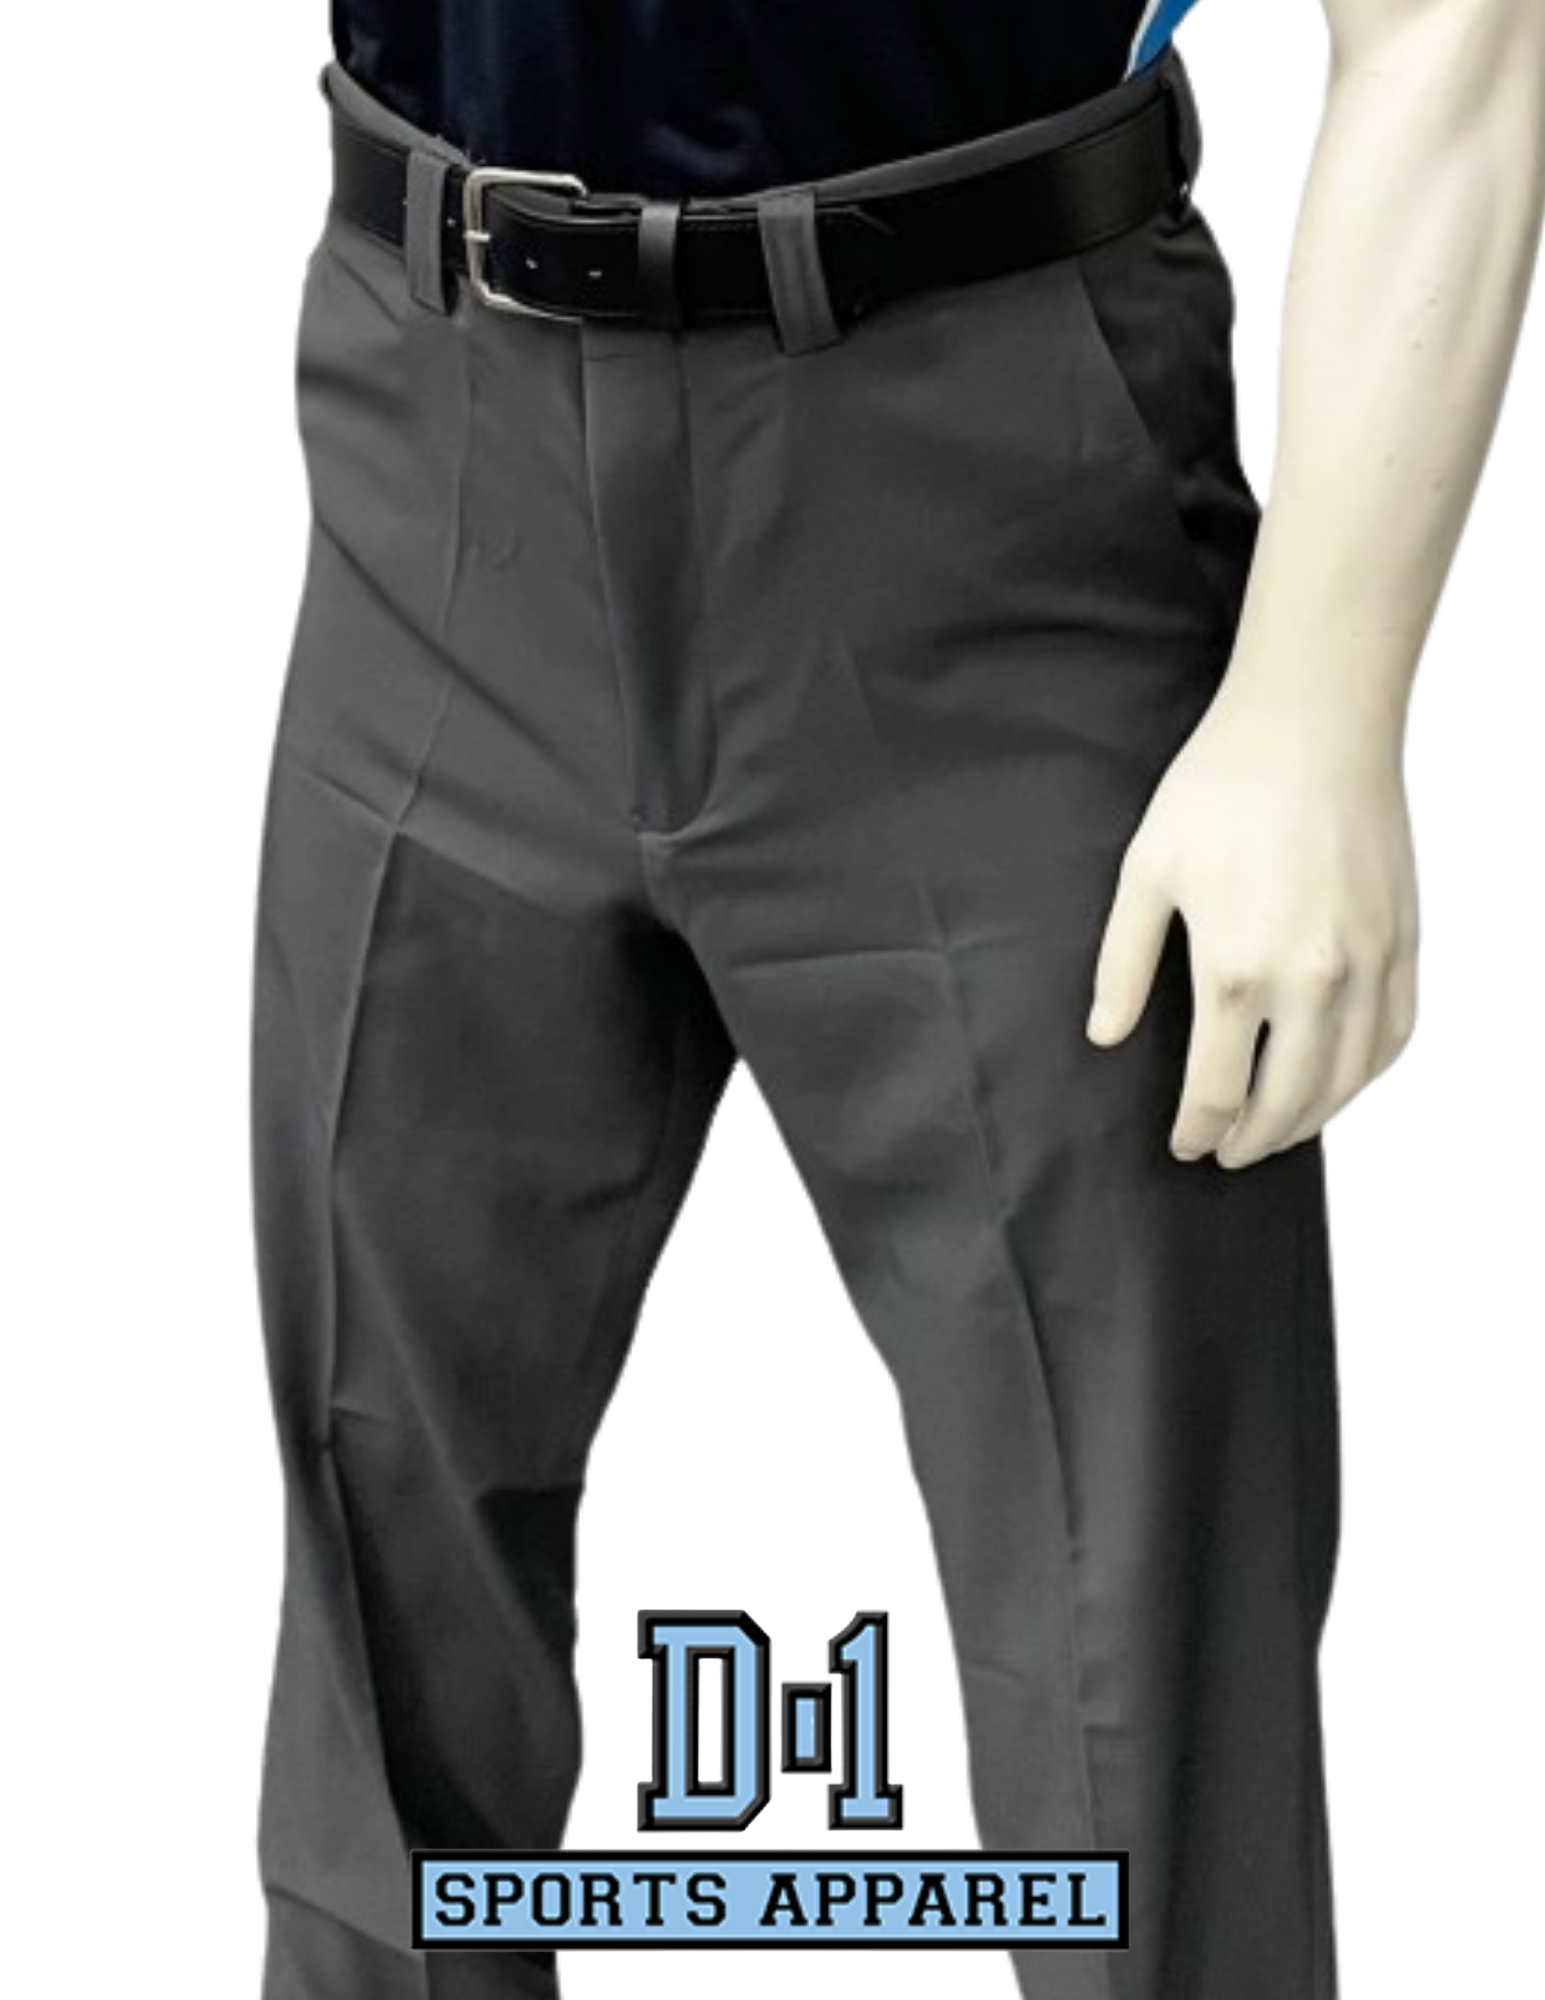 NCAA Men's 4-Way Stretch flat front BASE pants EXPANDER WAISTBAND - Charcoal Grey